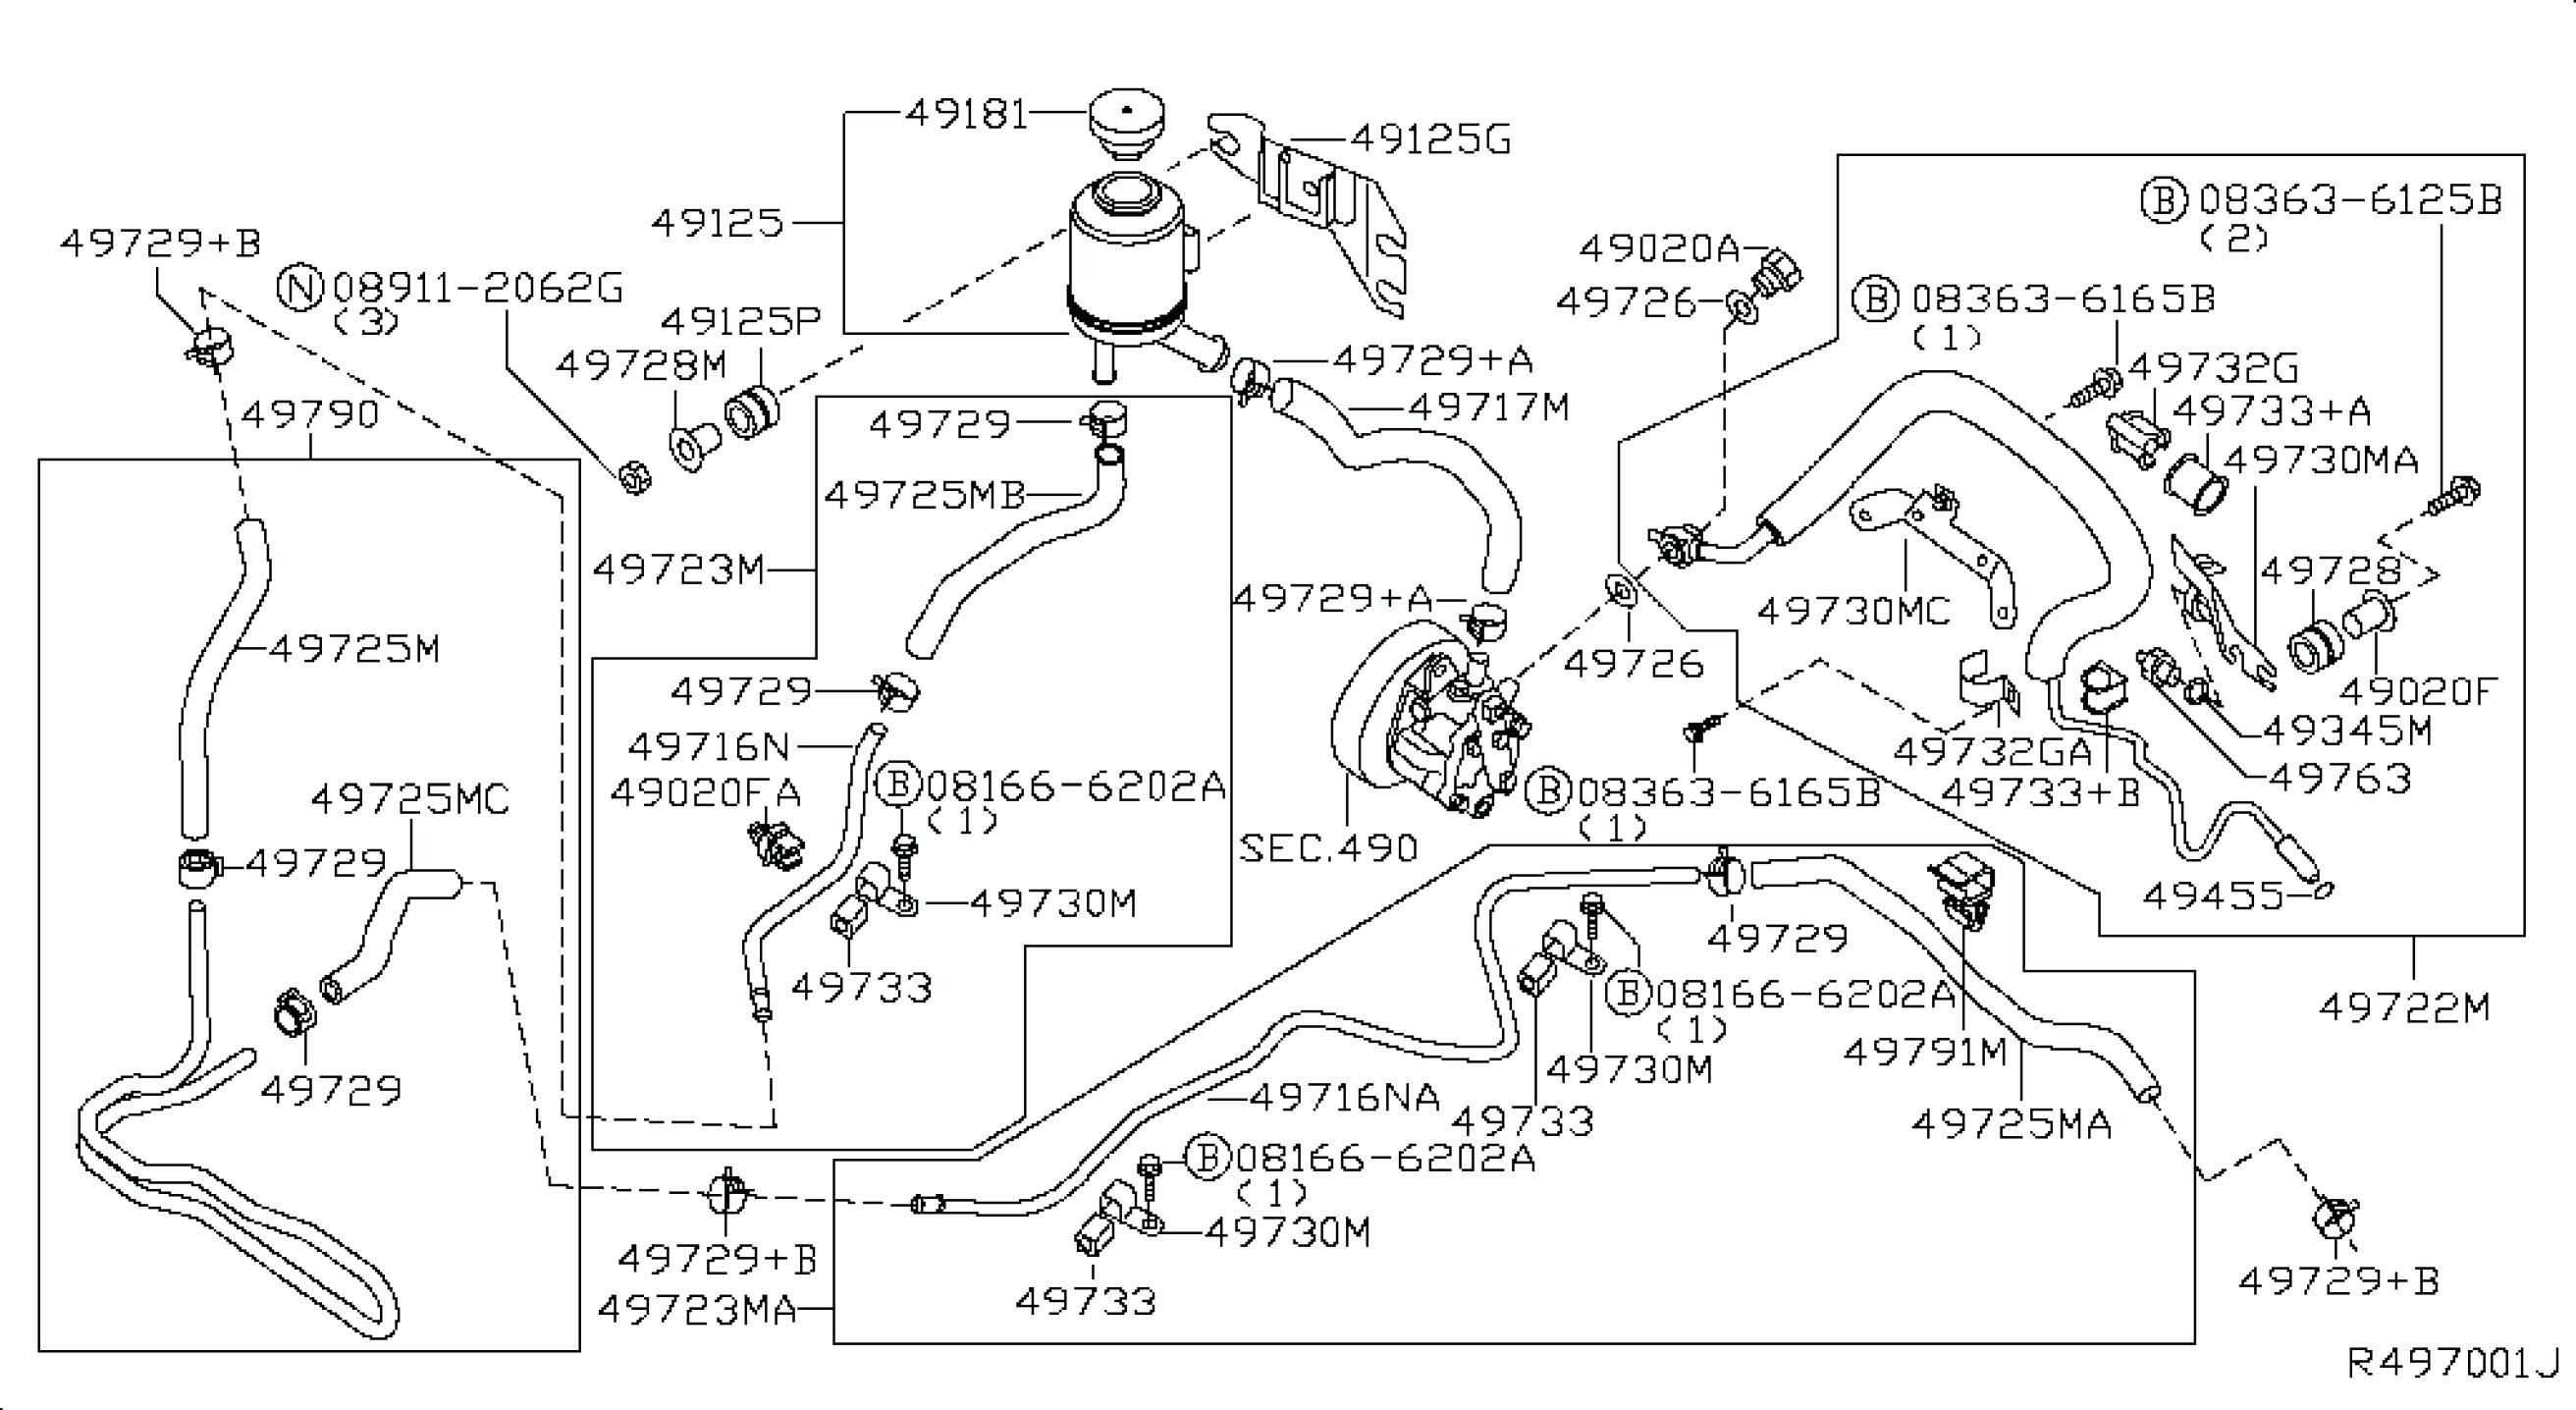 Wiring Diagram PDF: 165601 North Star Generator Wiring Diagram